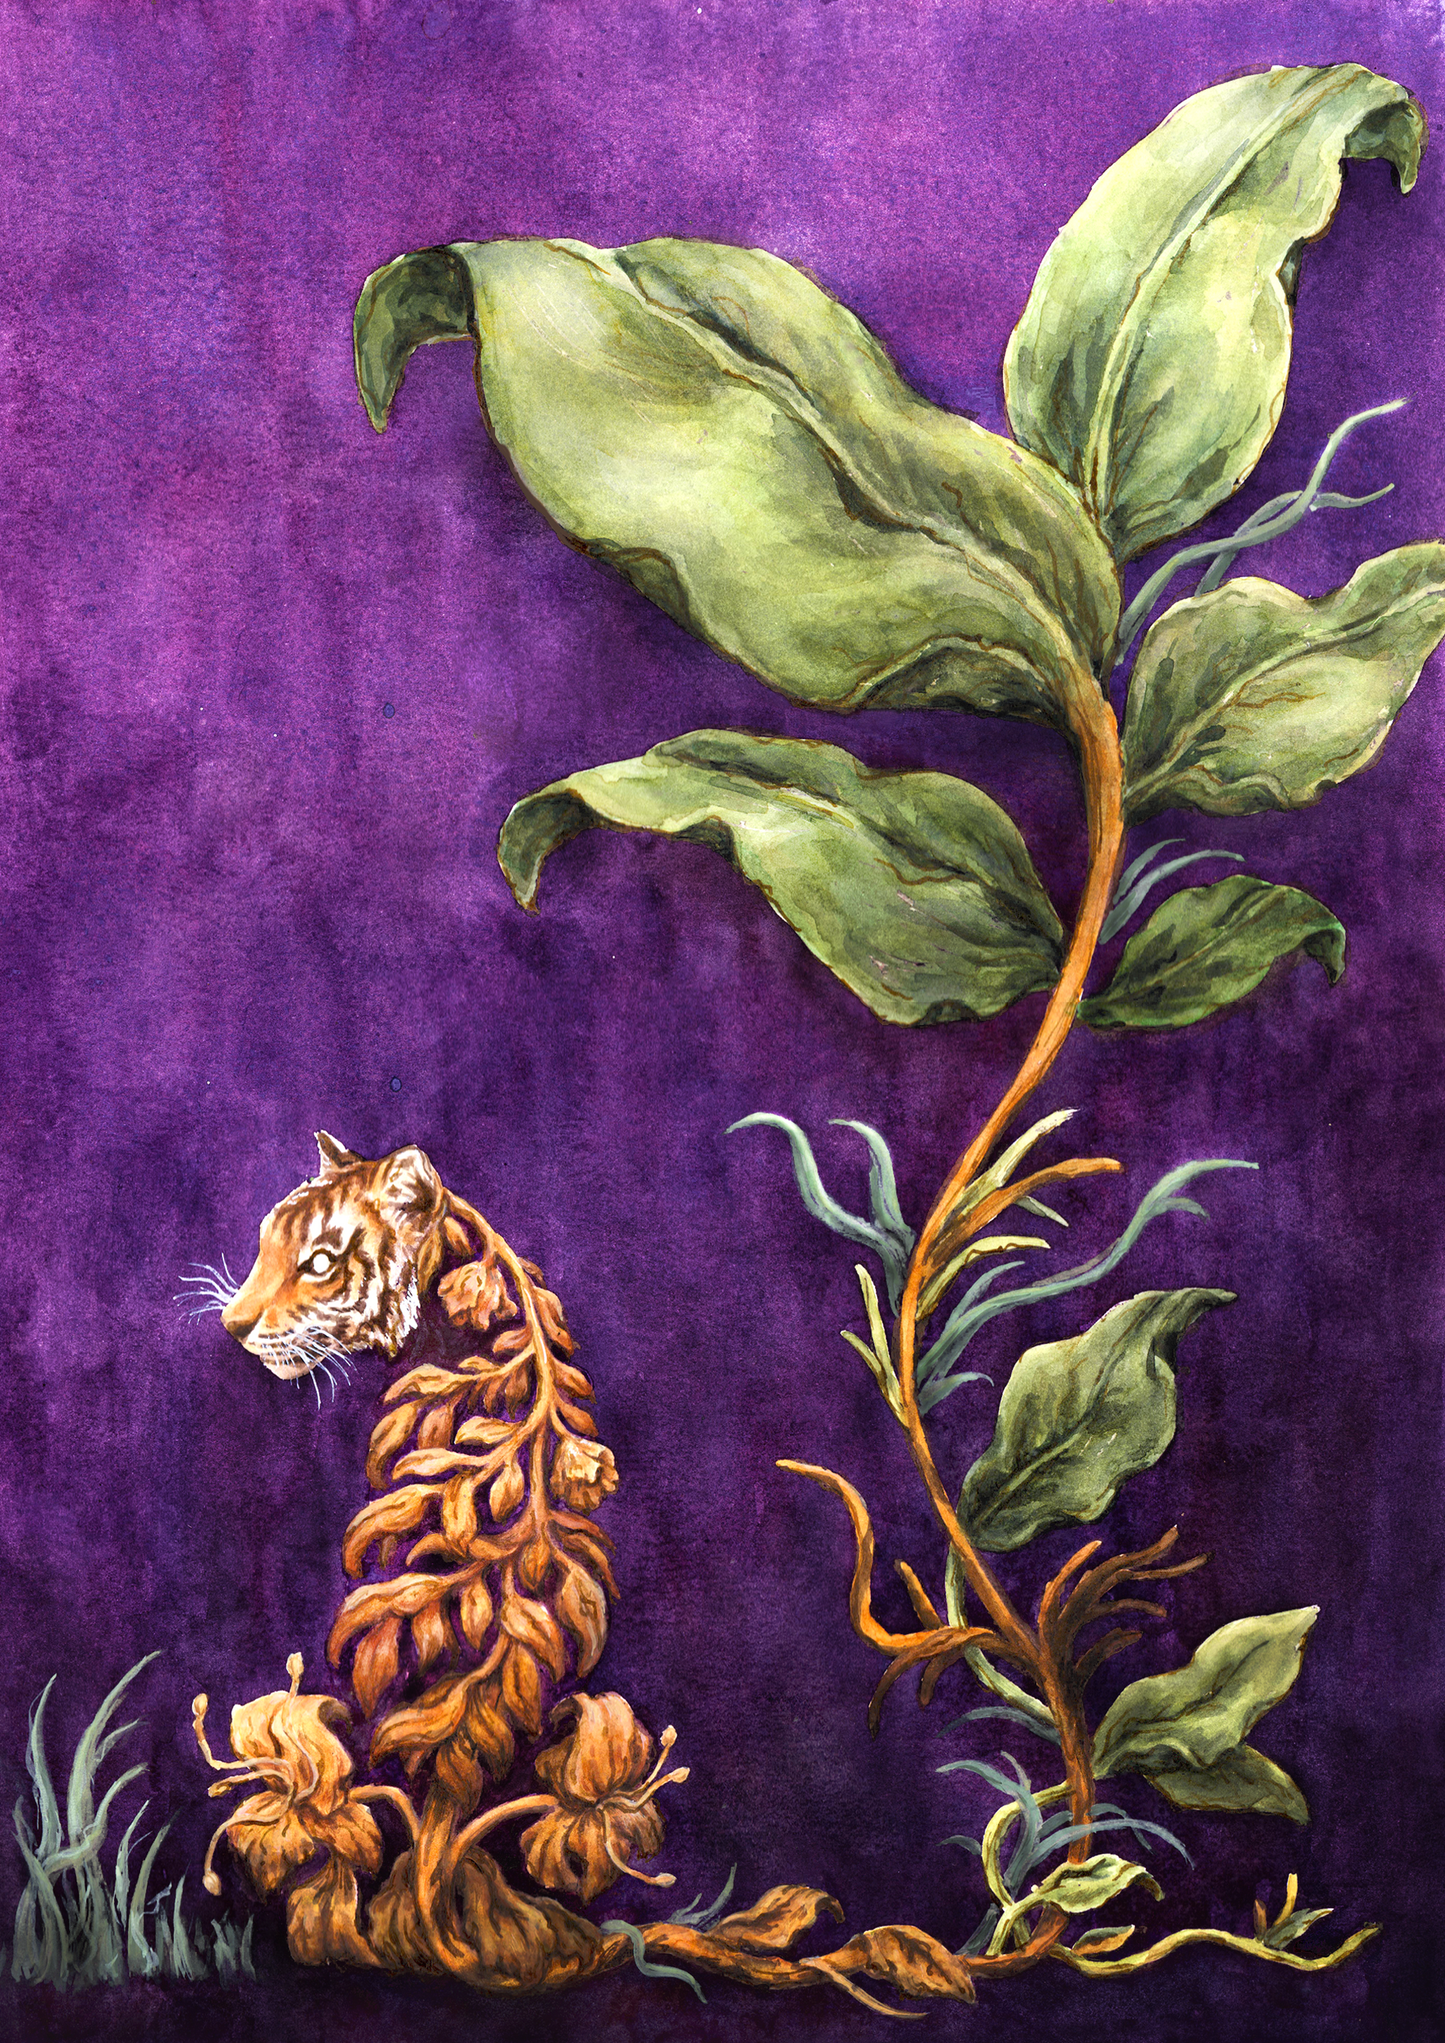 Tiger Tree | Print